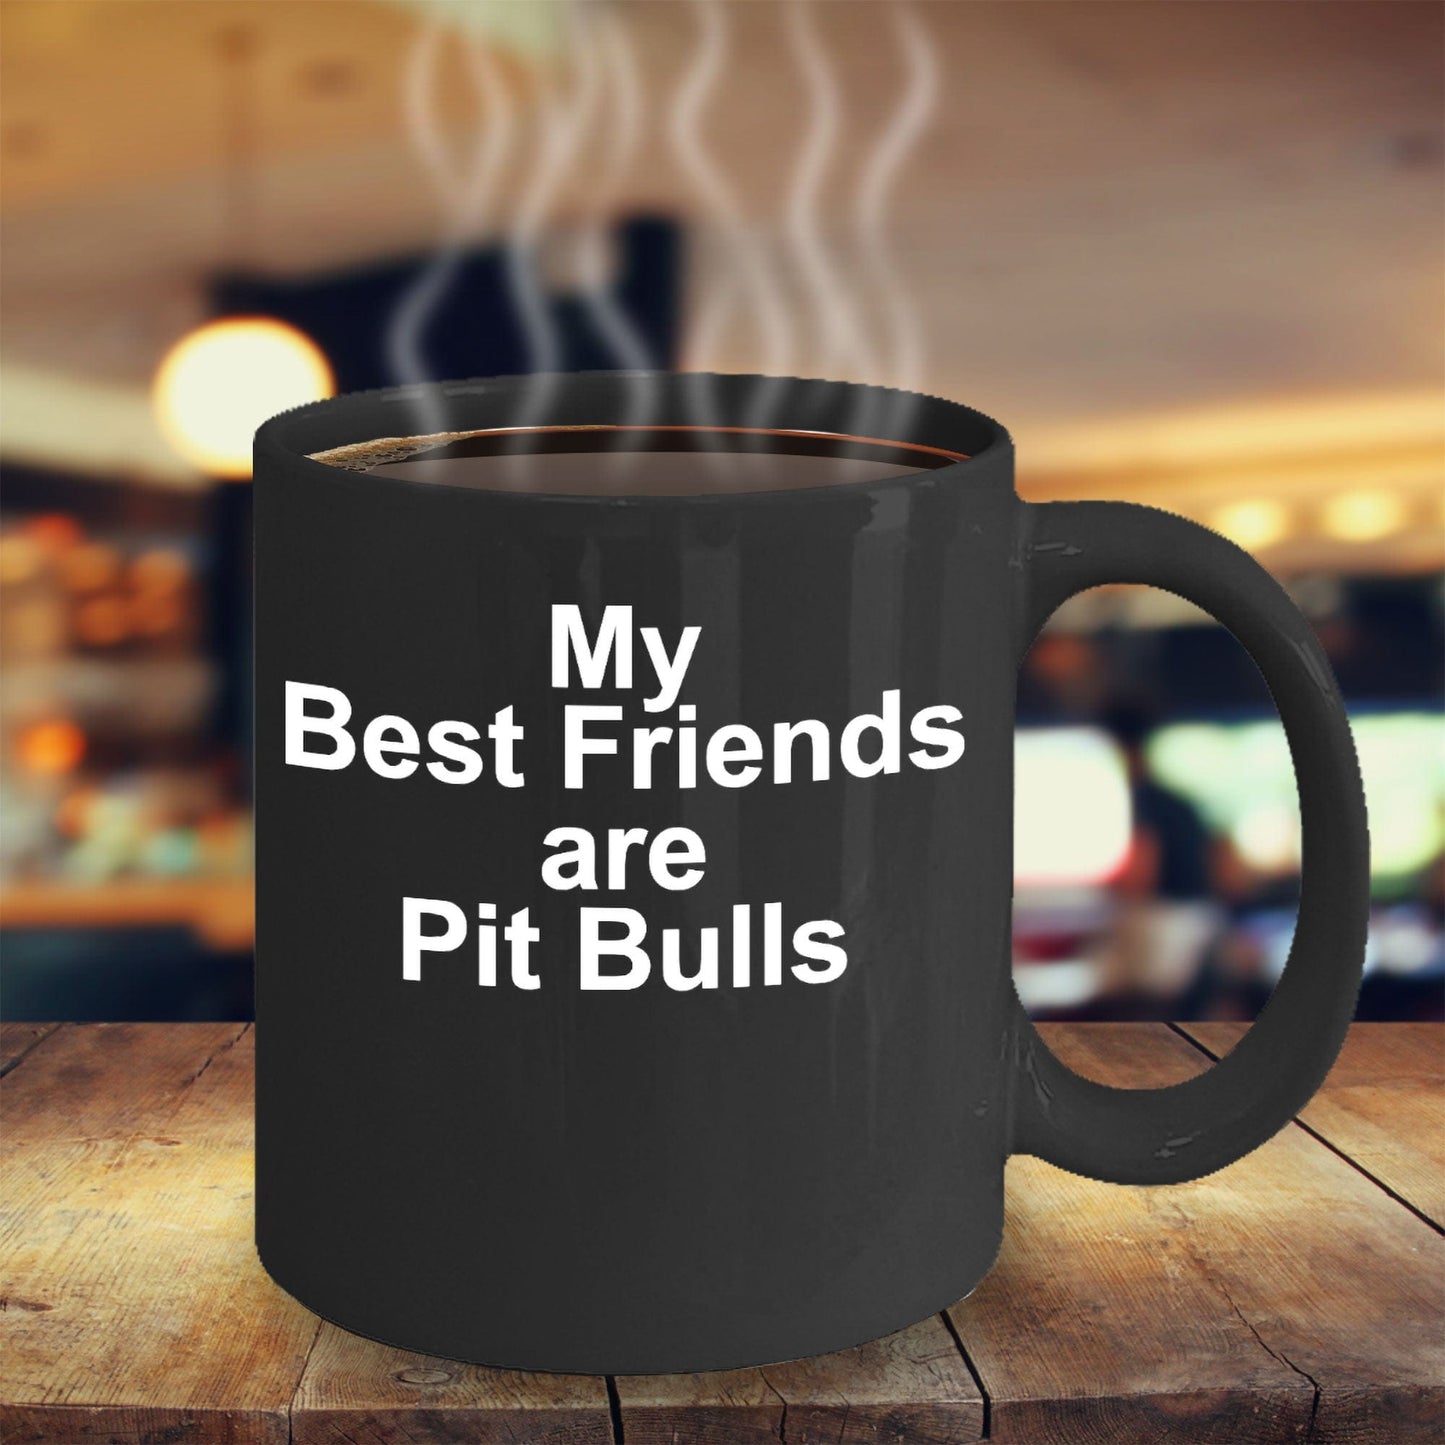 Pit Bull Black Coffee Mug - My Best Friends are Pit Bulls